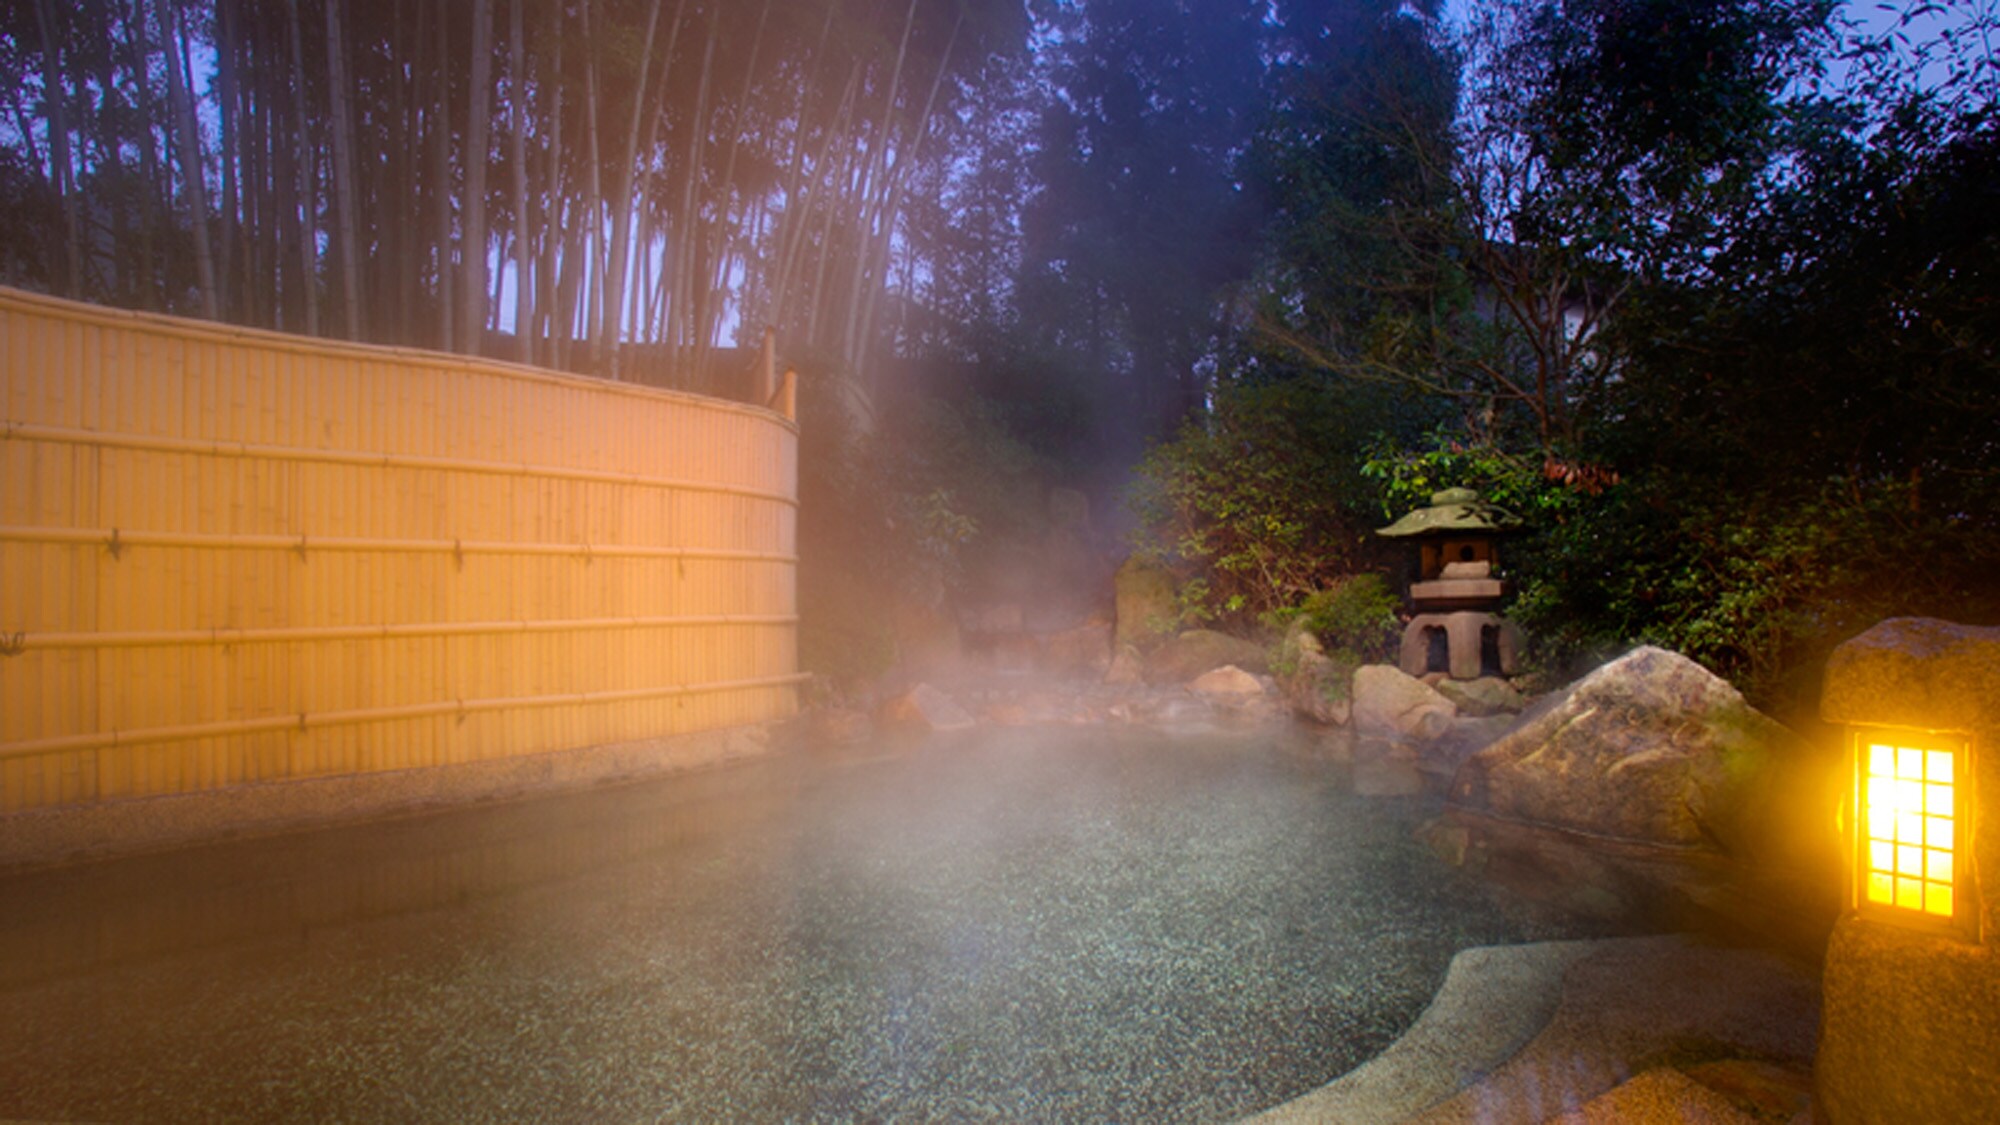 ■ Open-air bath at night